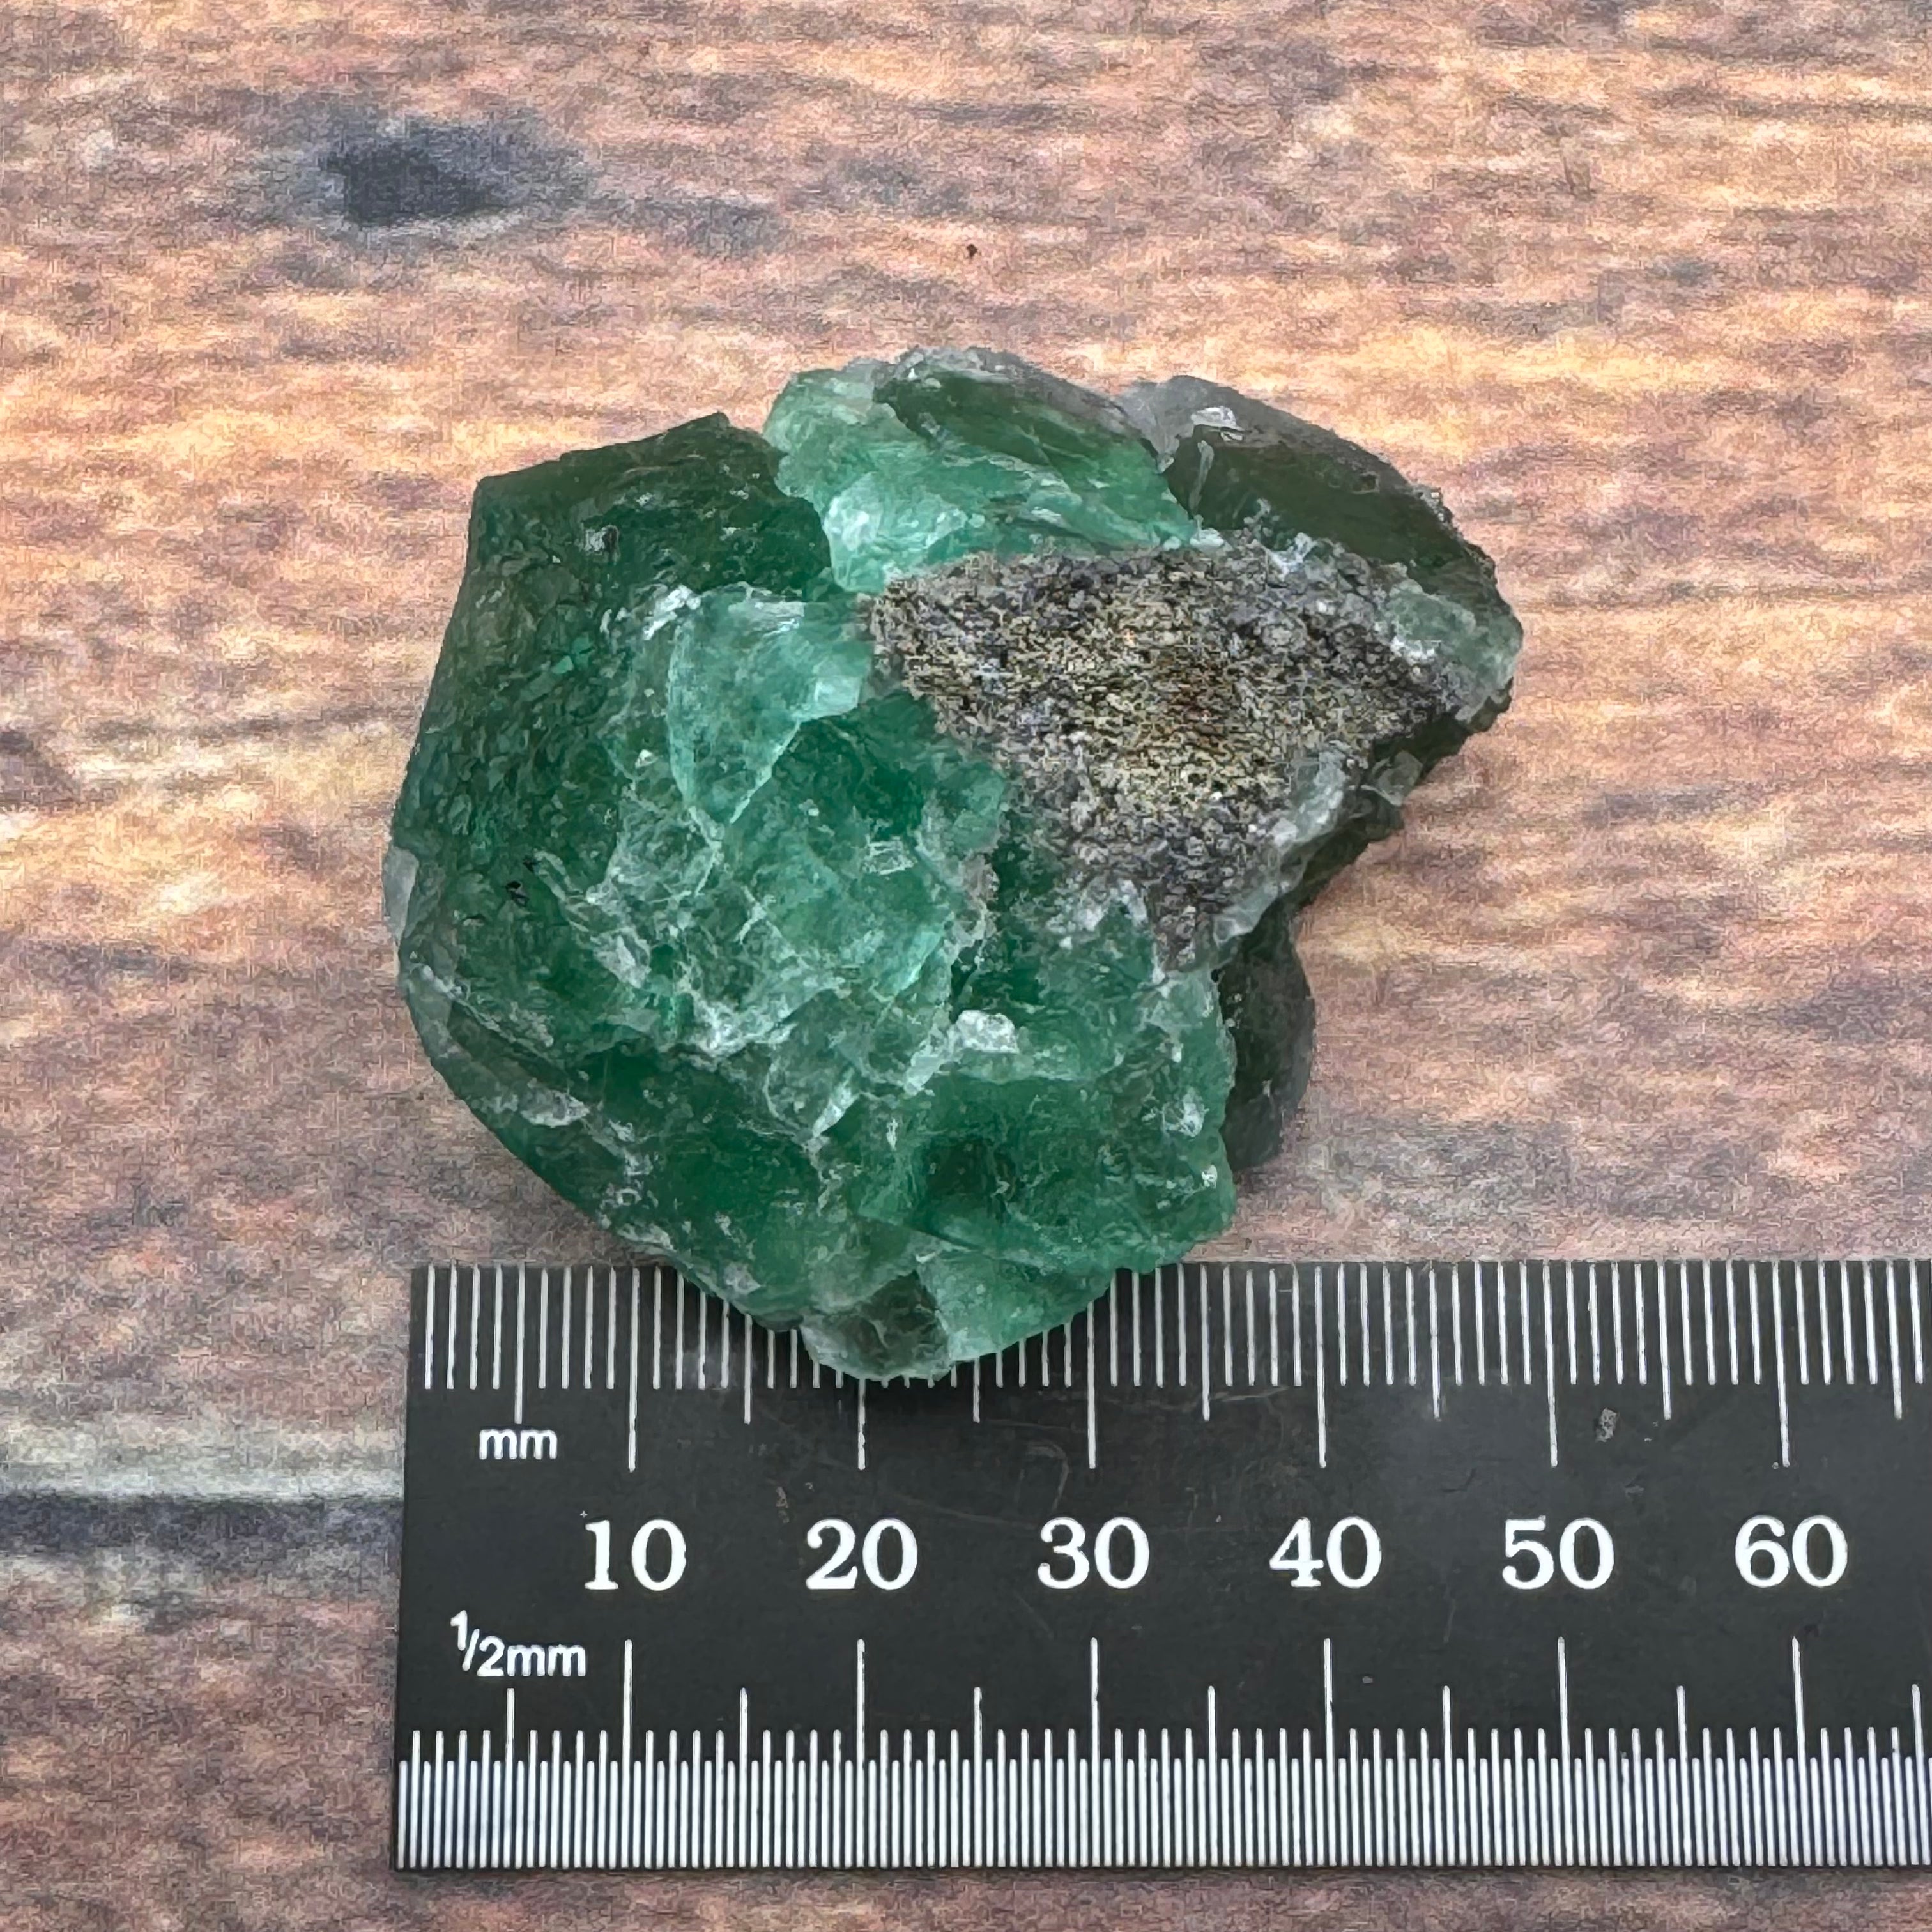 Peruvian Supernatural Green Fluorite - 089